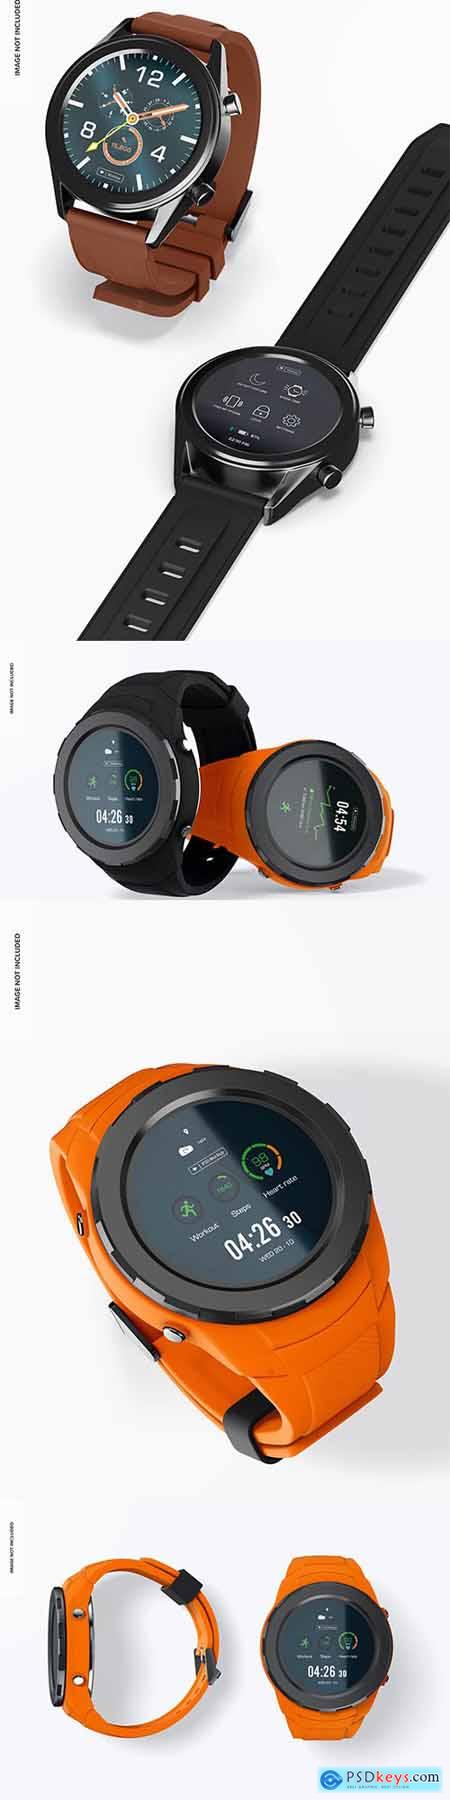 Smartwatch mockup